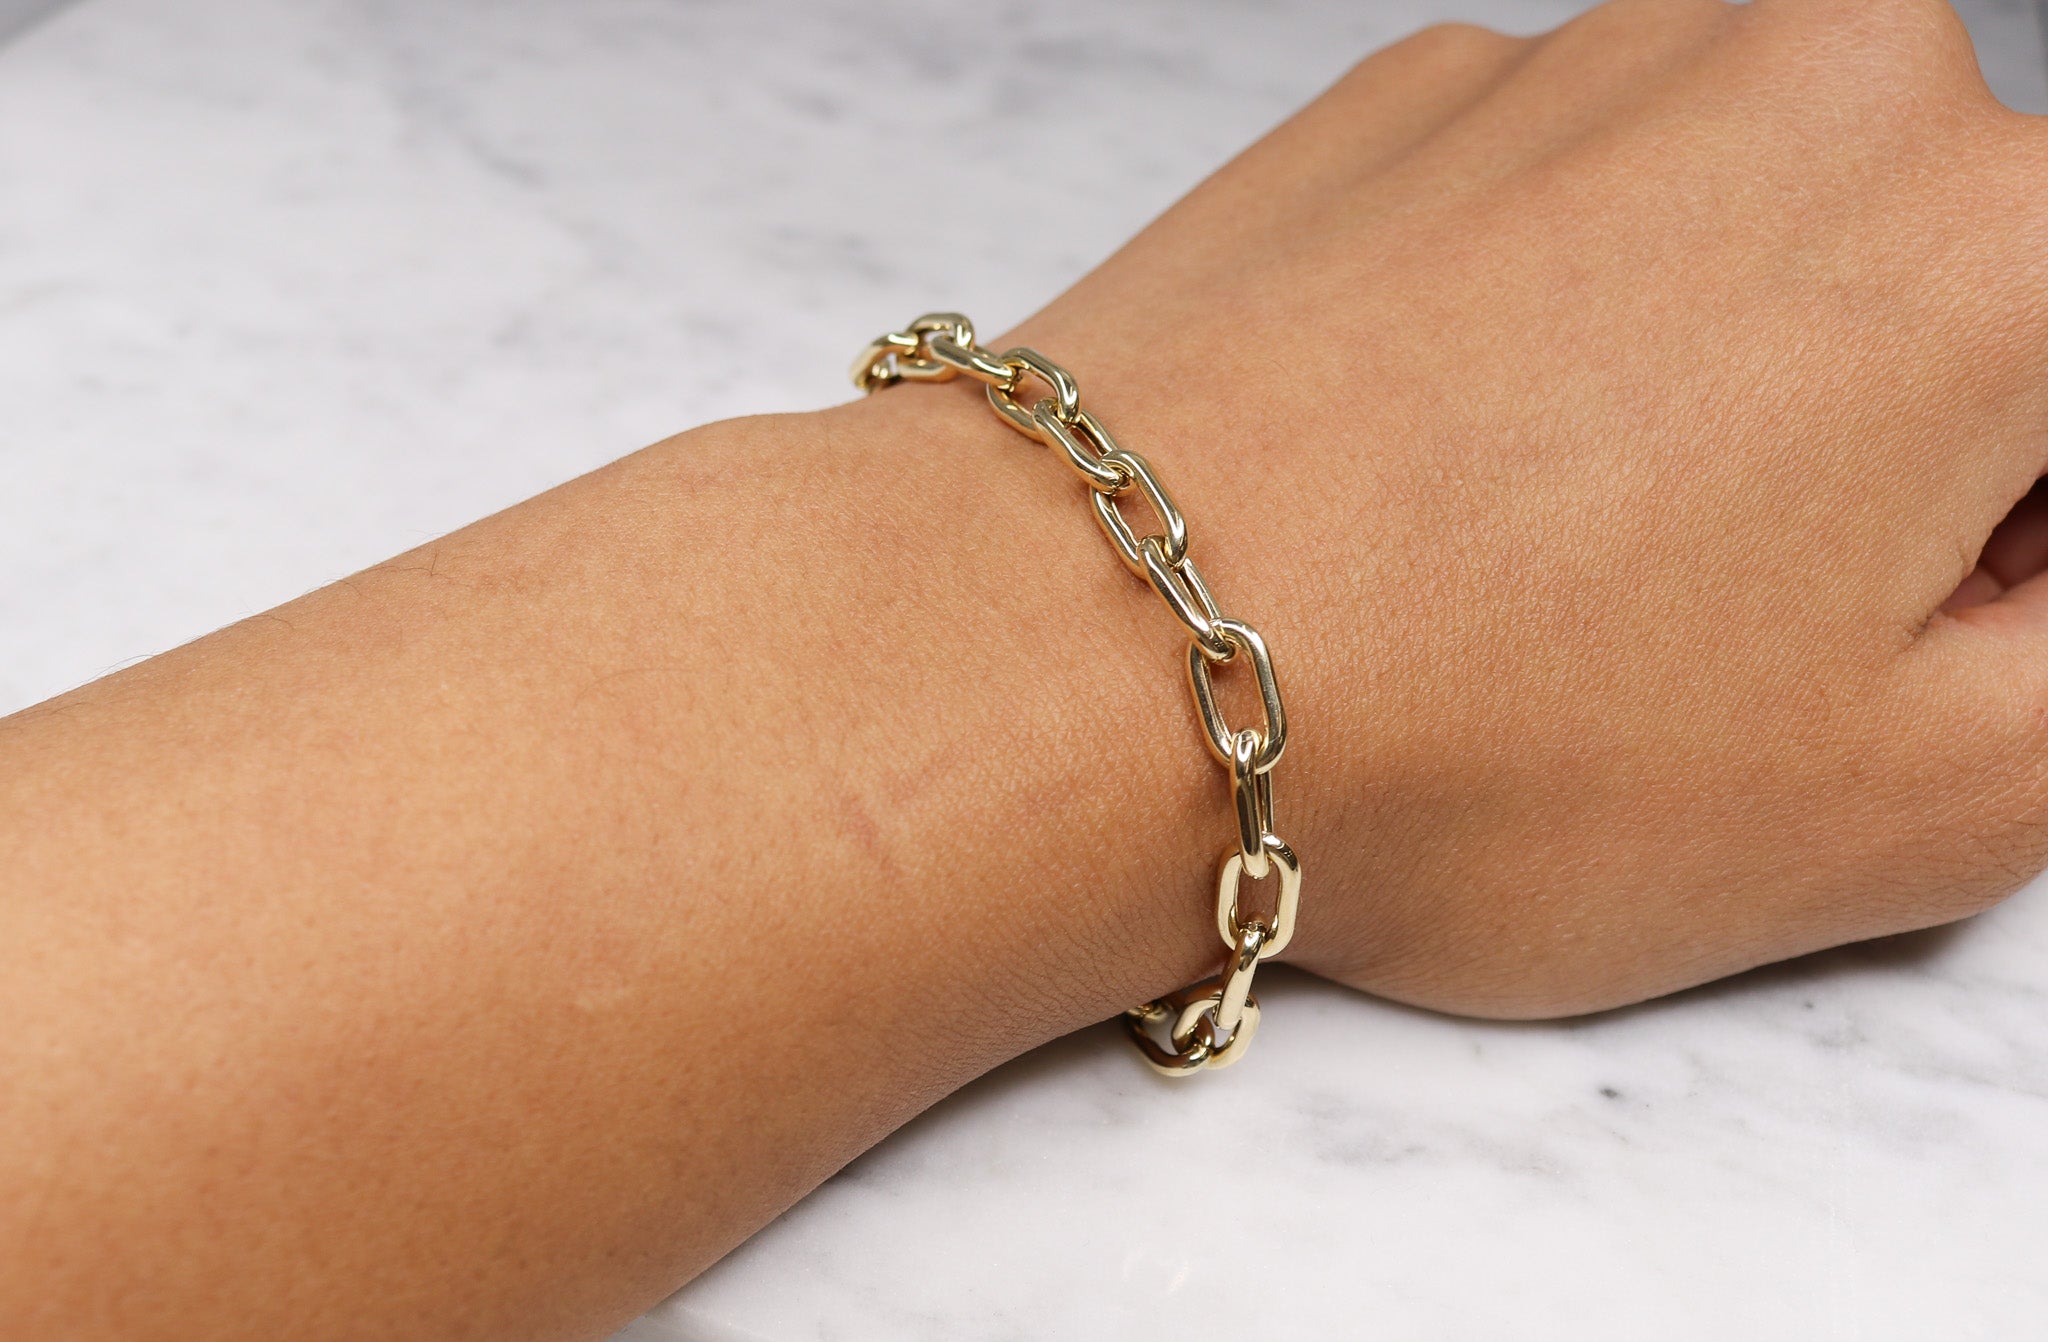 14K Gold Box Link Bracelet - Nolita